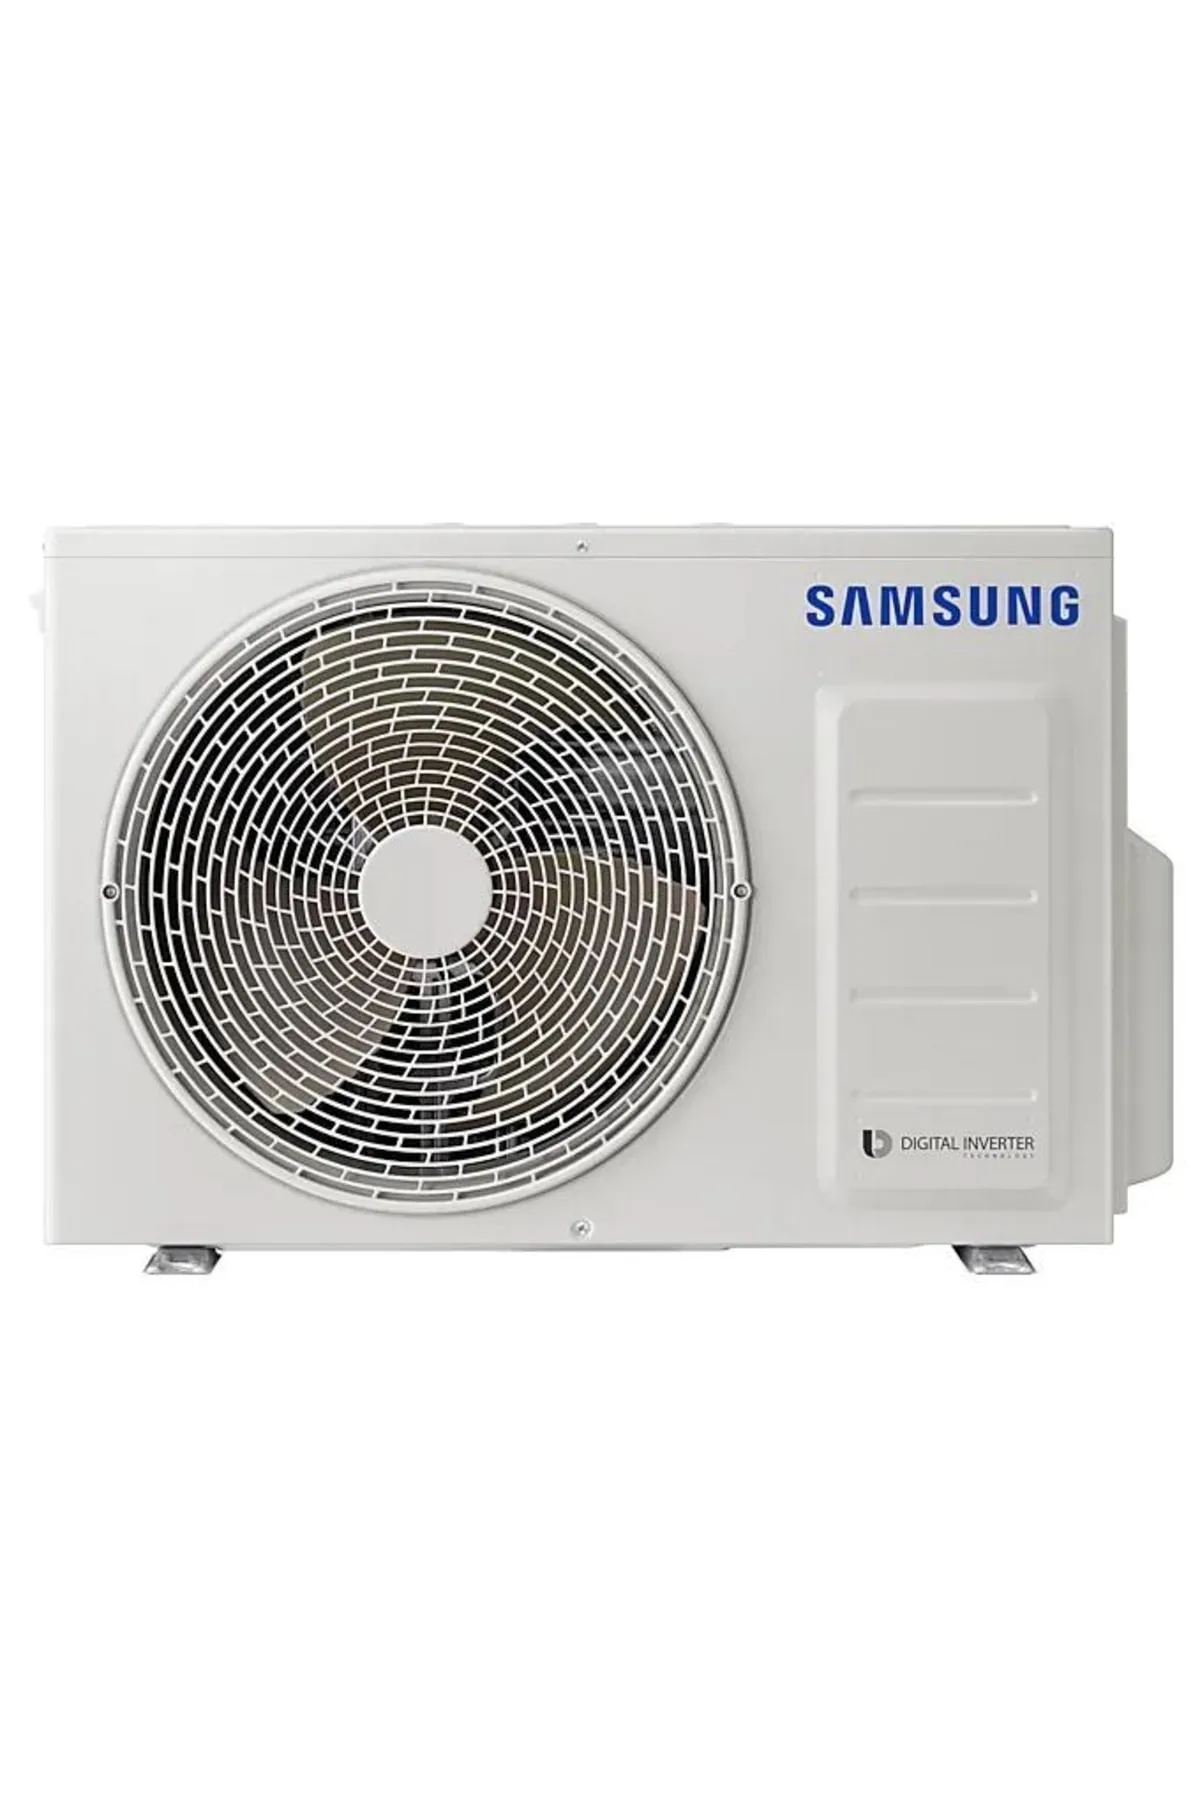 Samsung Windfree™ Multi Klima Takımı 1+2 Sistem 12+12 Btu/h İç Ünite 6,8 kW Dış Ünite